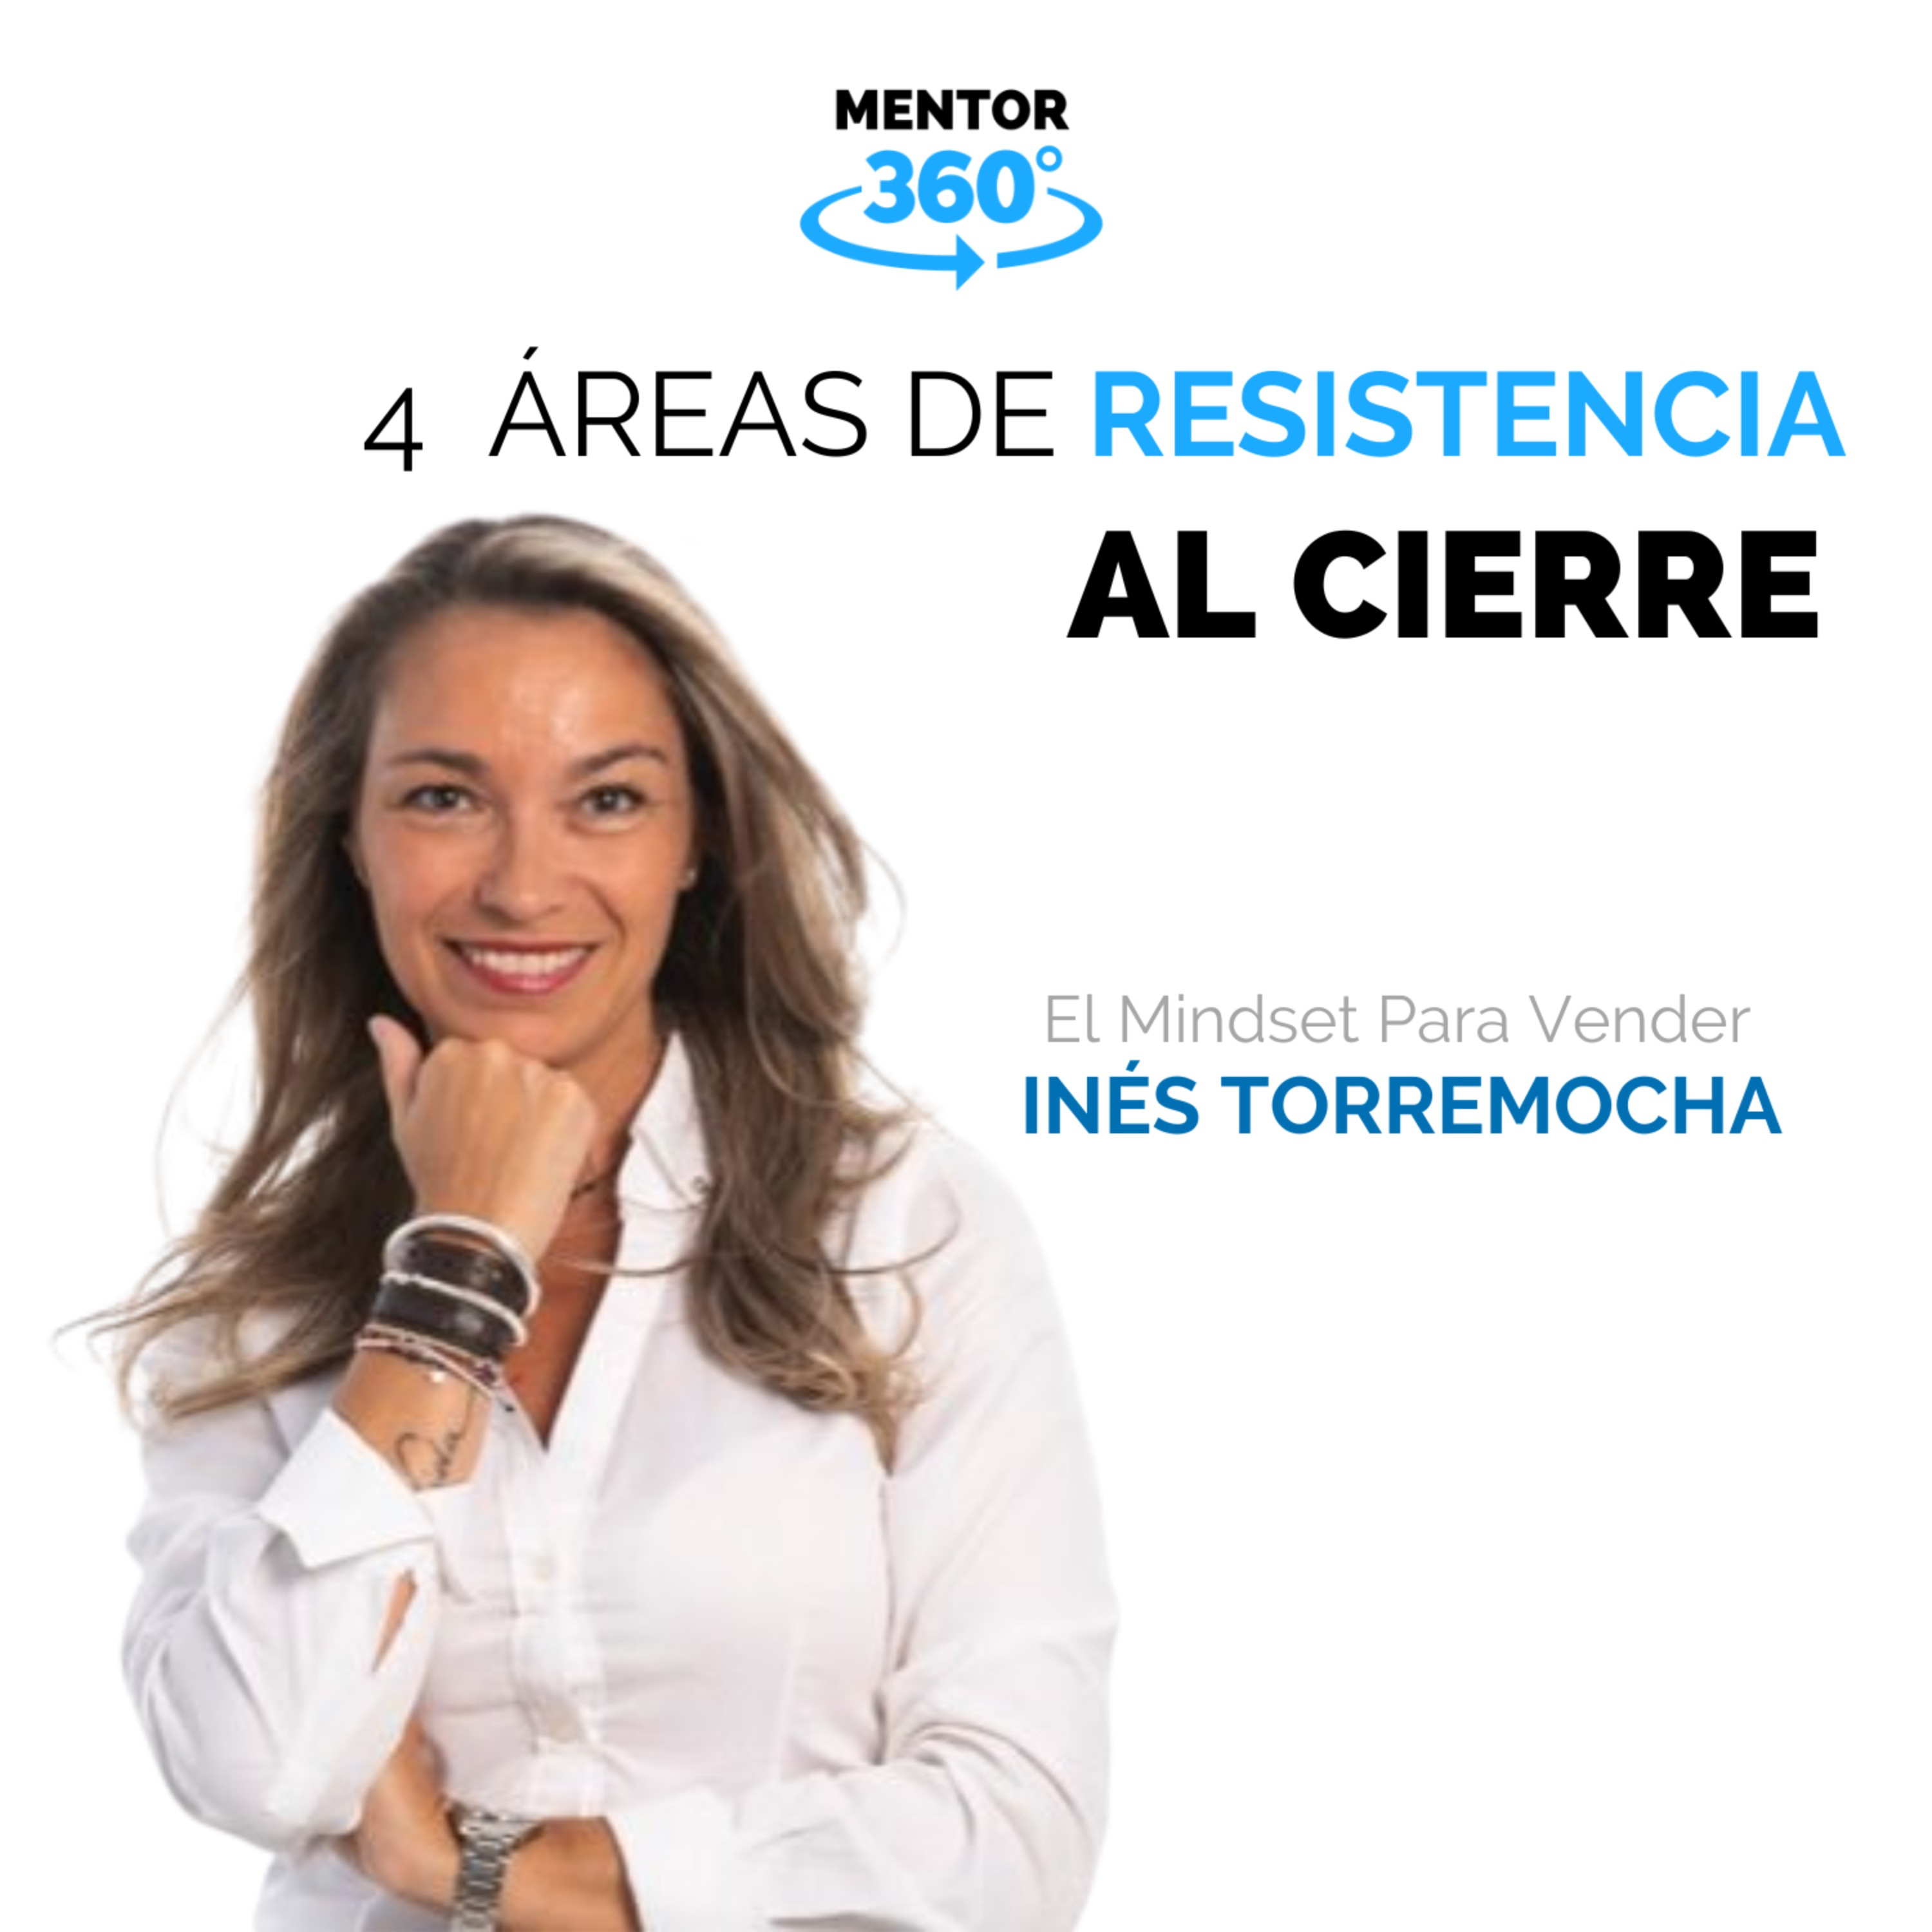 4 Areas De Resistencia Al Cierre - El Mindset Para Vender - Inés Torremocha - MENTOR360